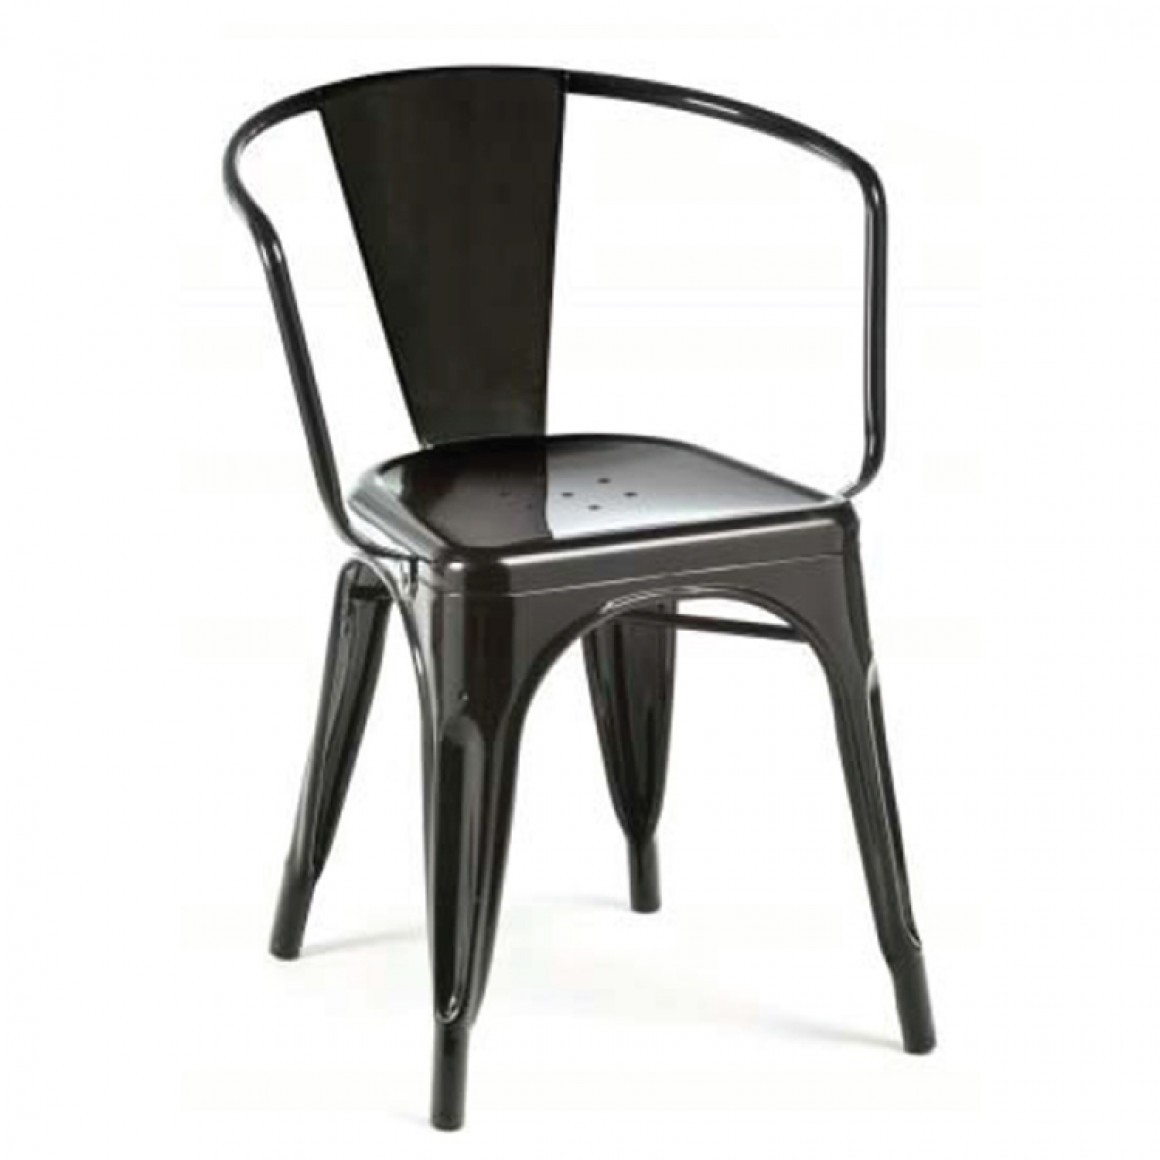 Chair: steel frame, black